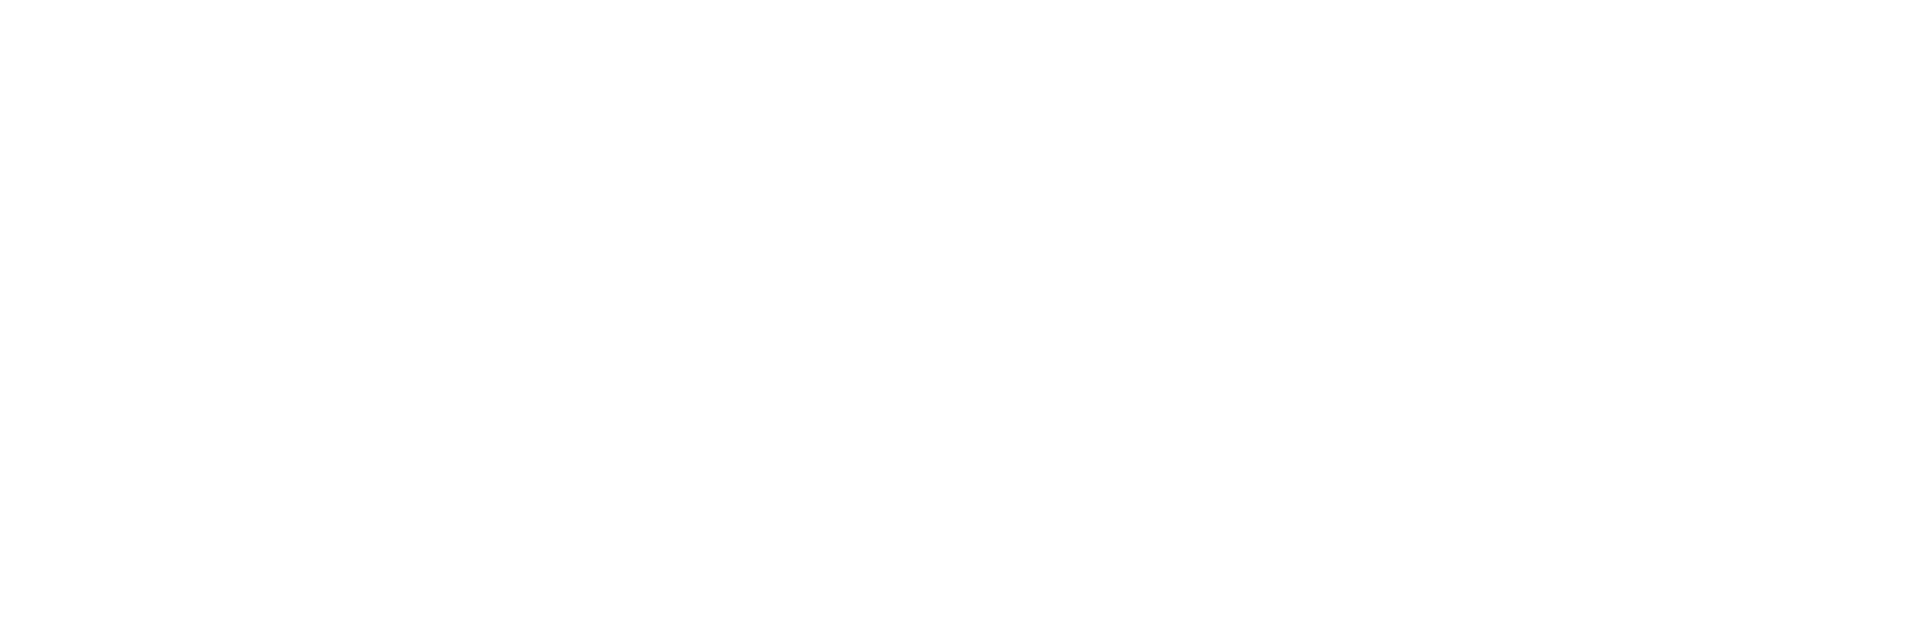 Thomas James Designs - East End Custom Woodworking & Remodeling